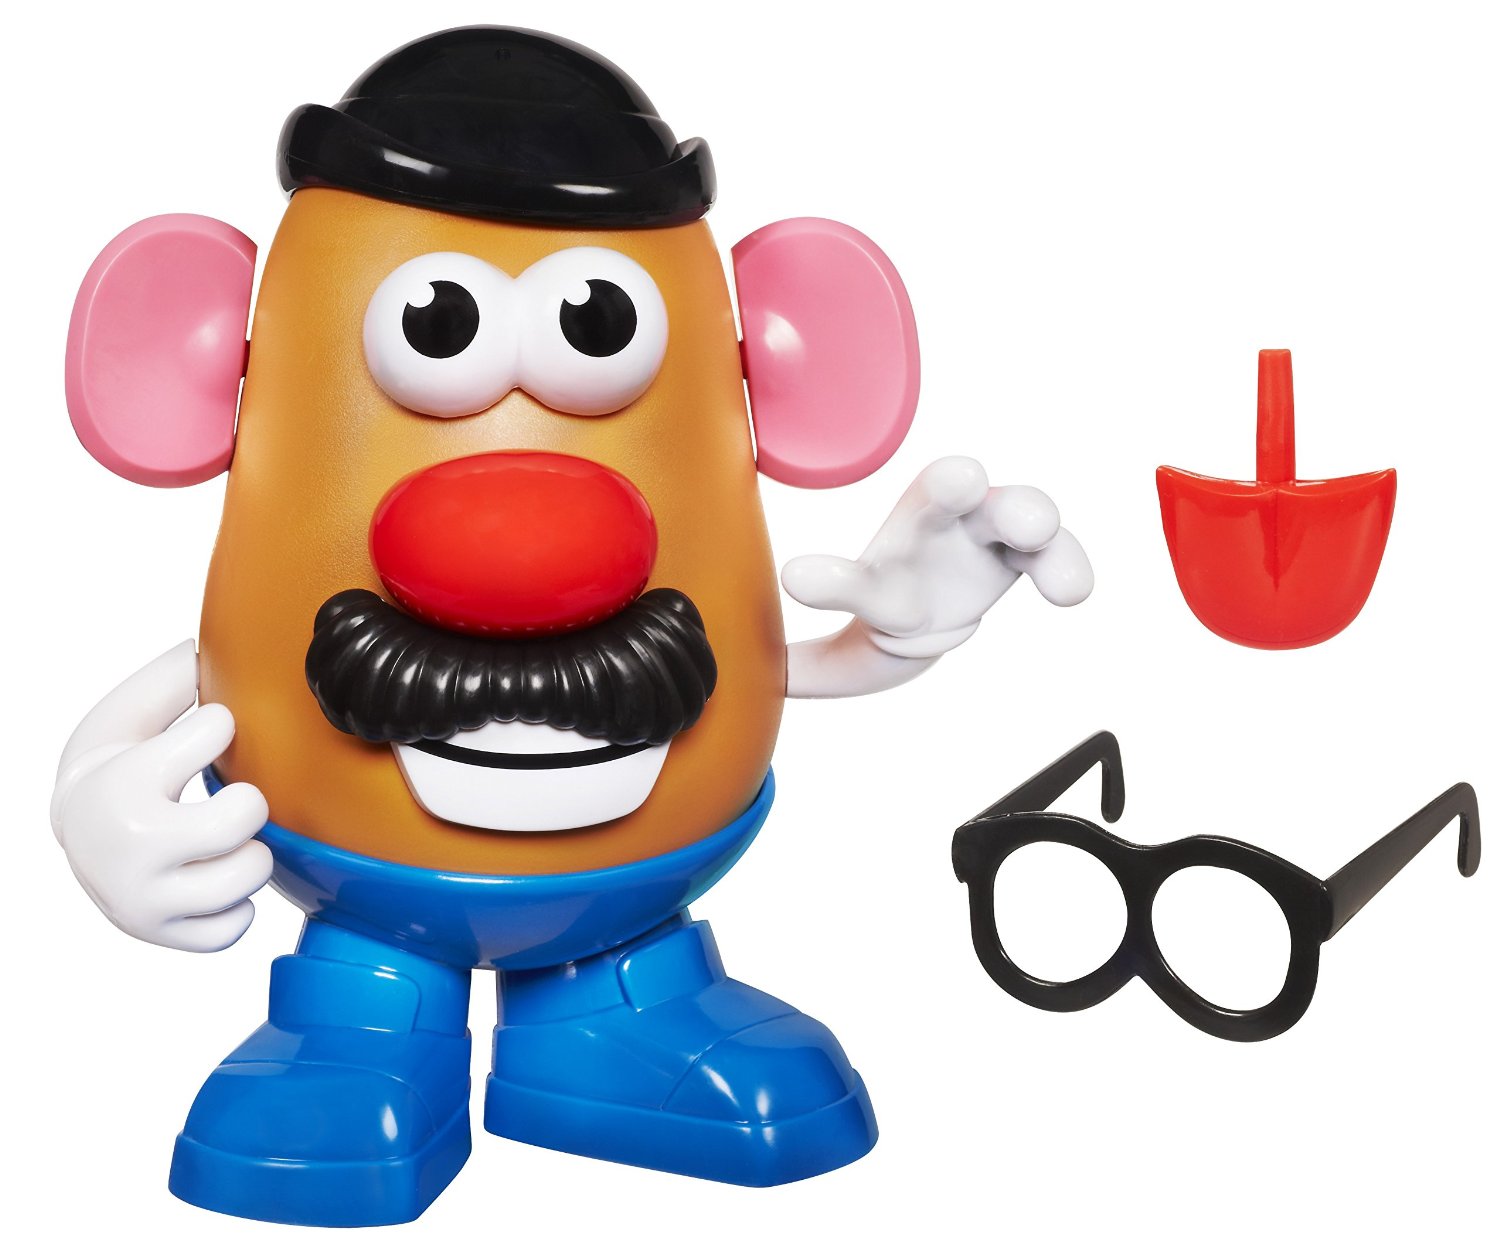 Playskool Mr. Potato Head Only $5.00 – 58% Savings!!